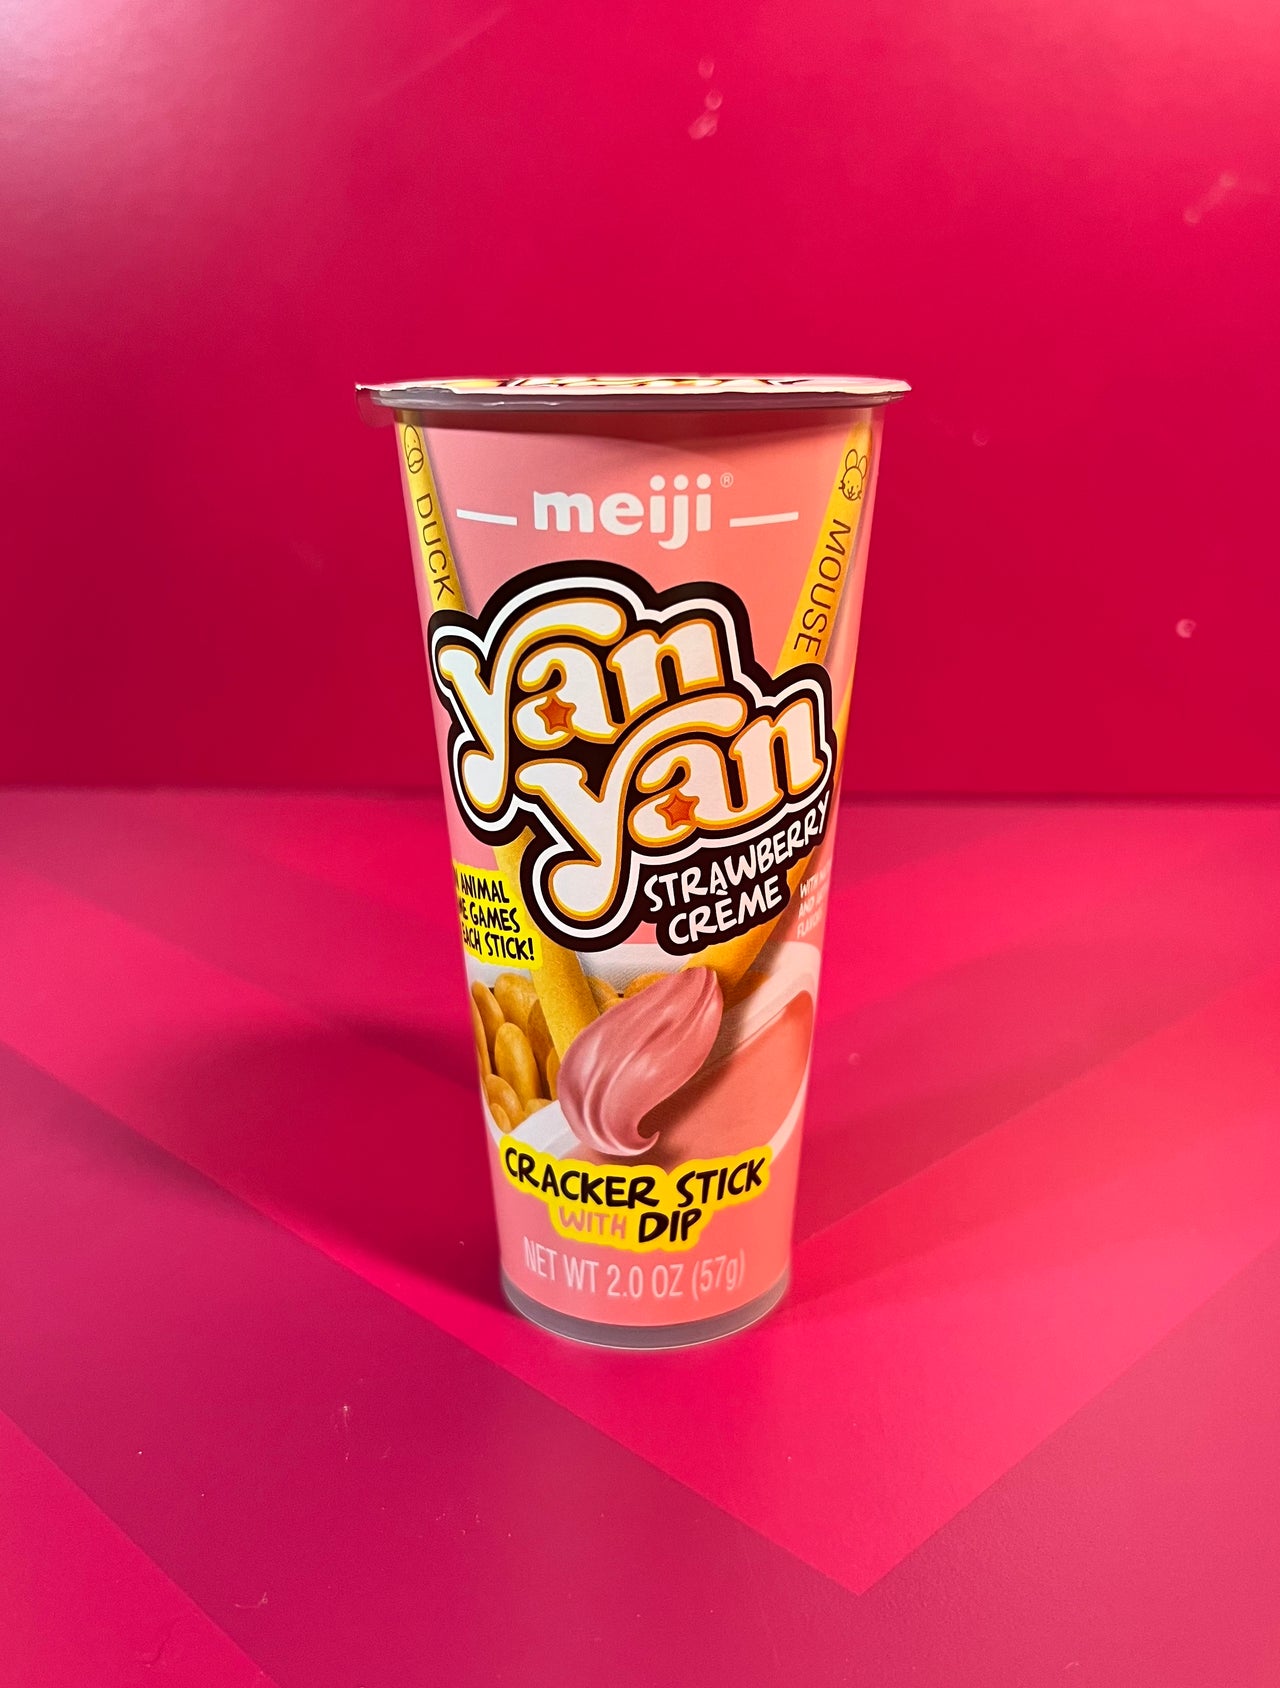 Yan Yan Strawberry Cream Cracker Sticks with Dip: A Berrylicious Snacking Adventure!